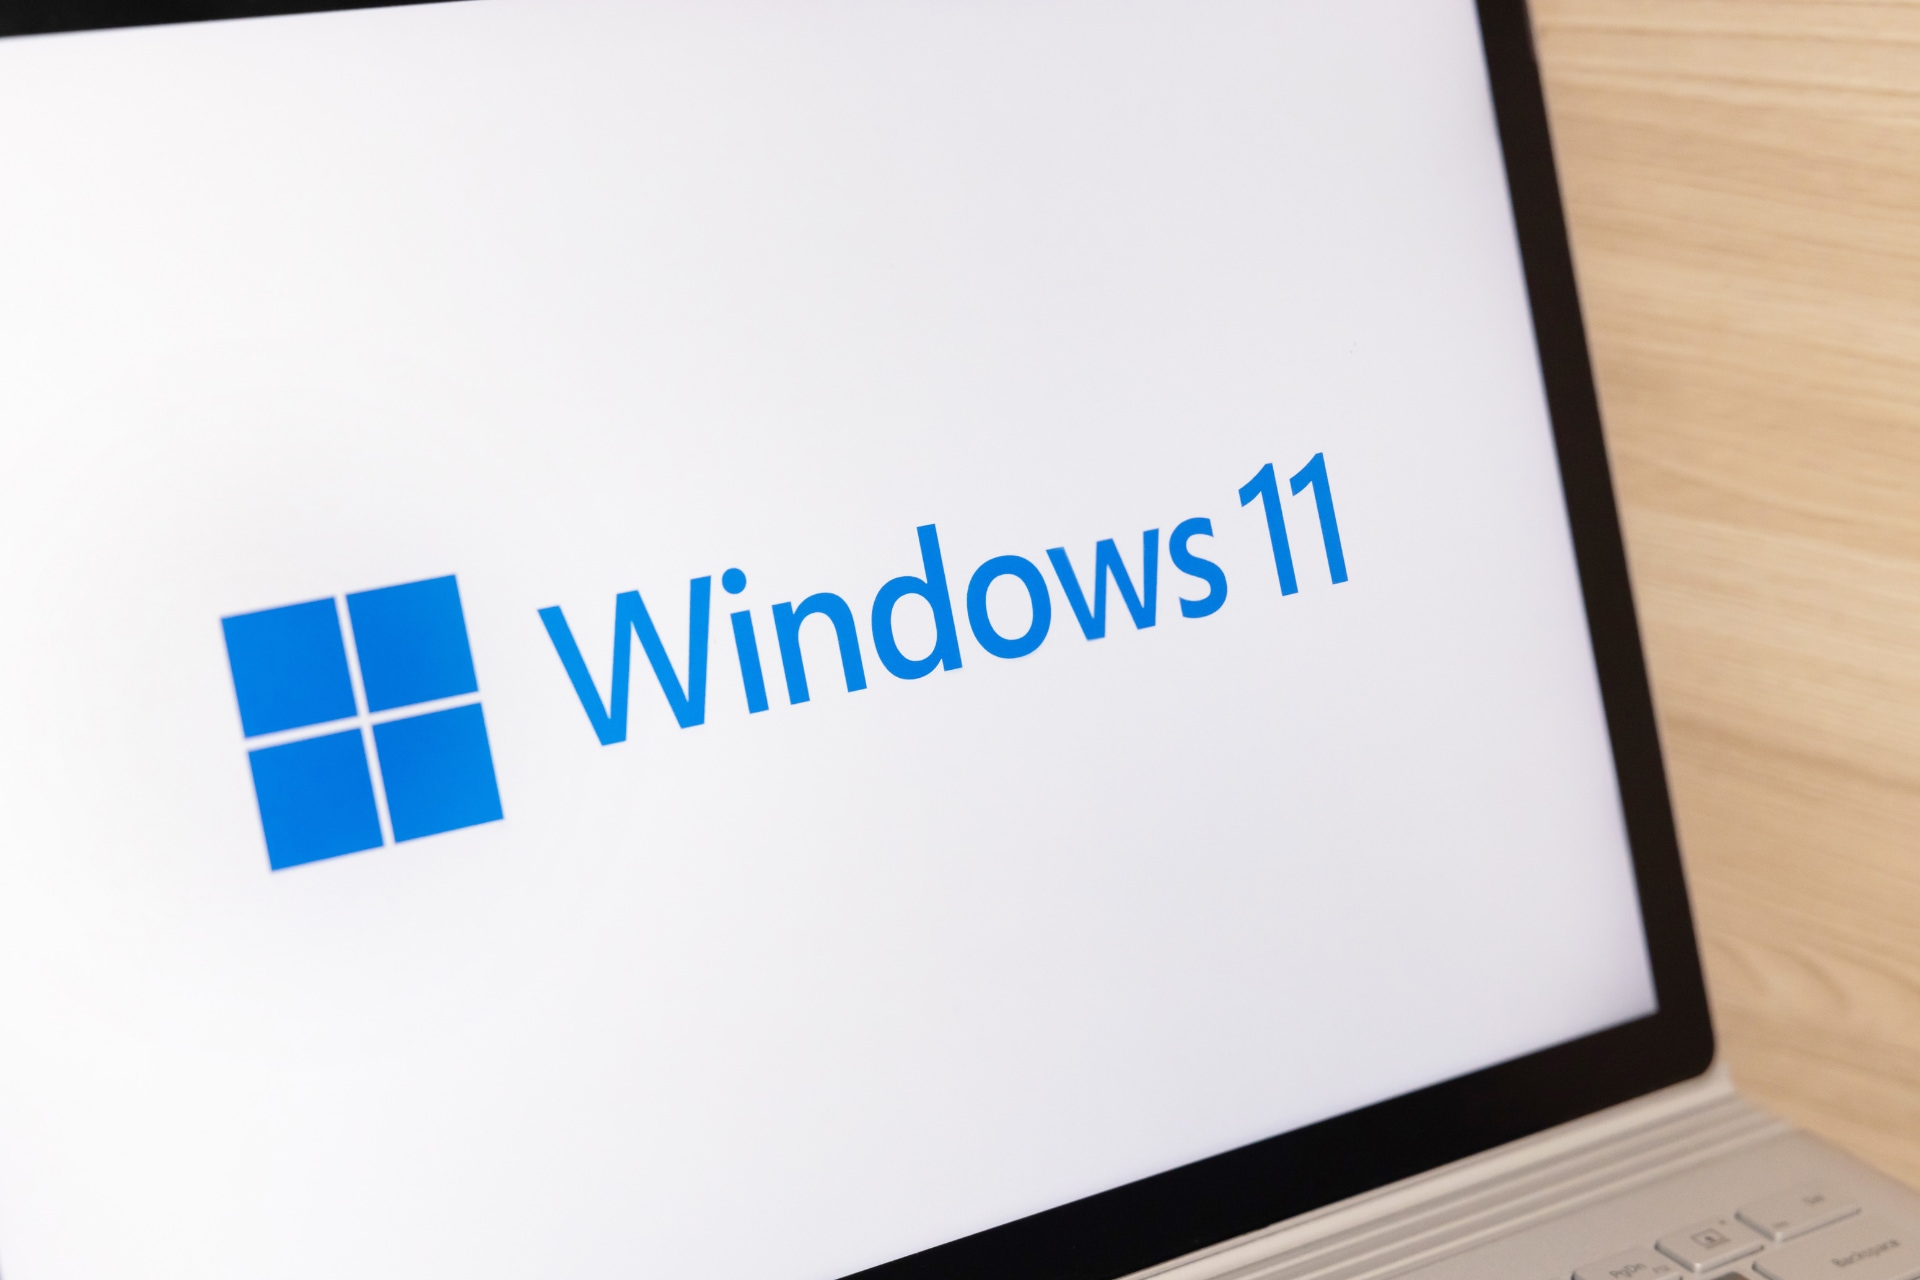 Windows 11 services information